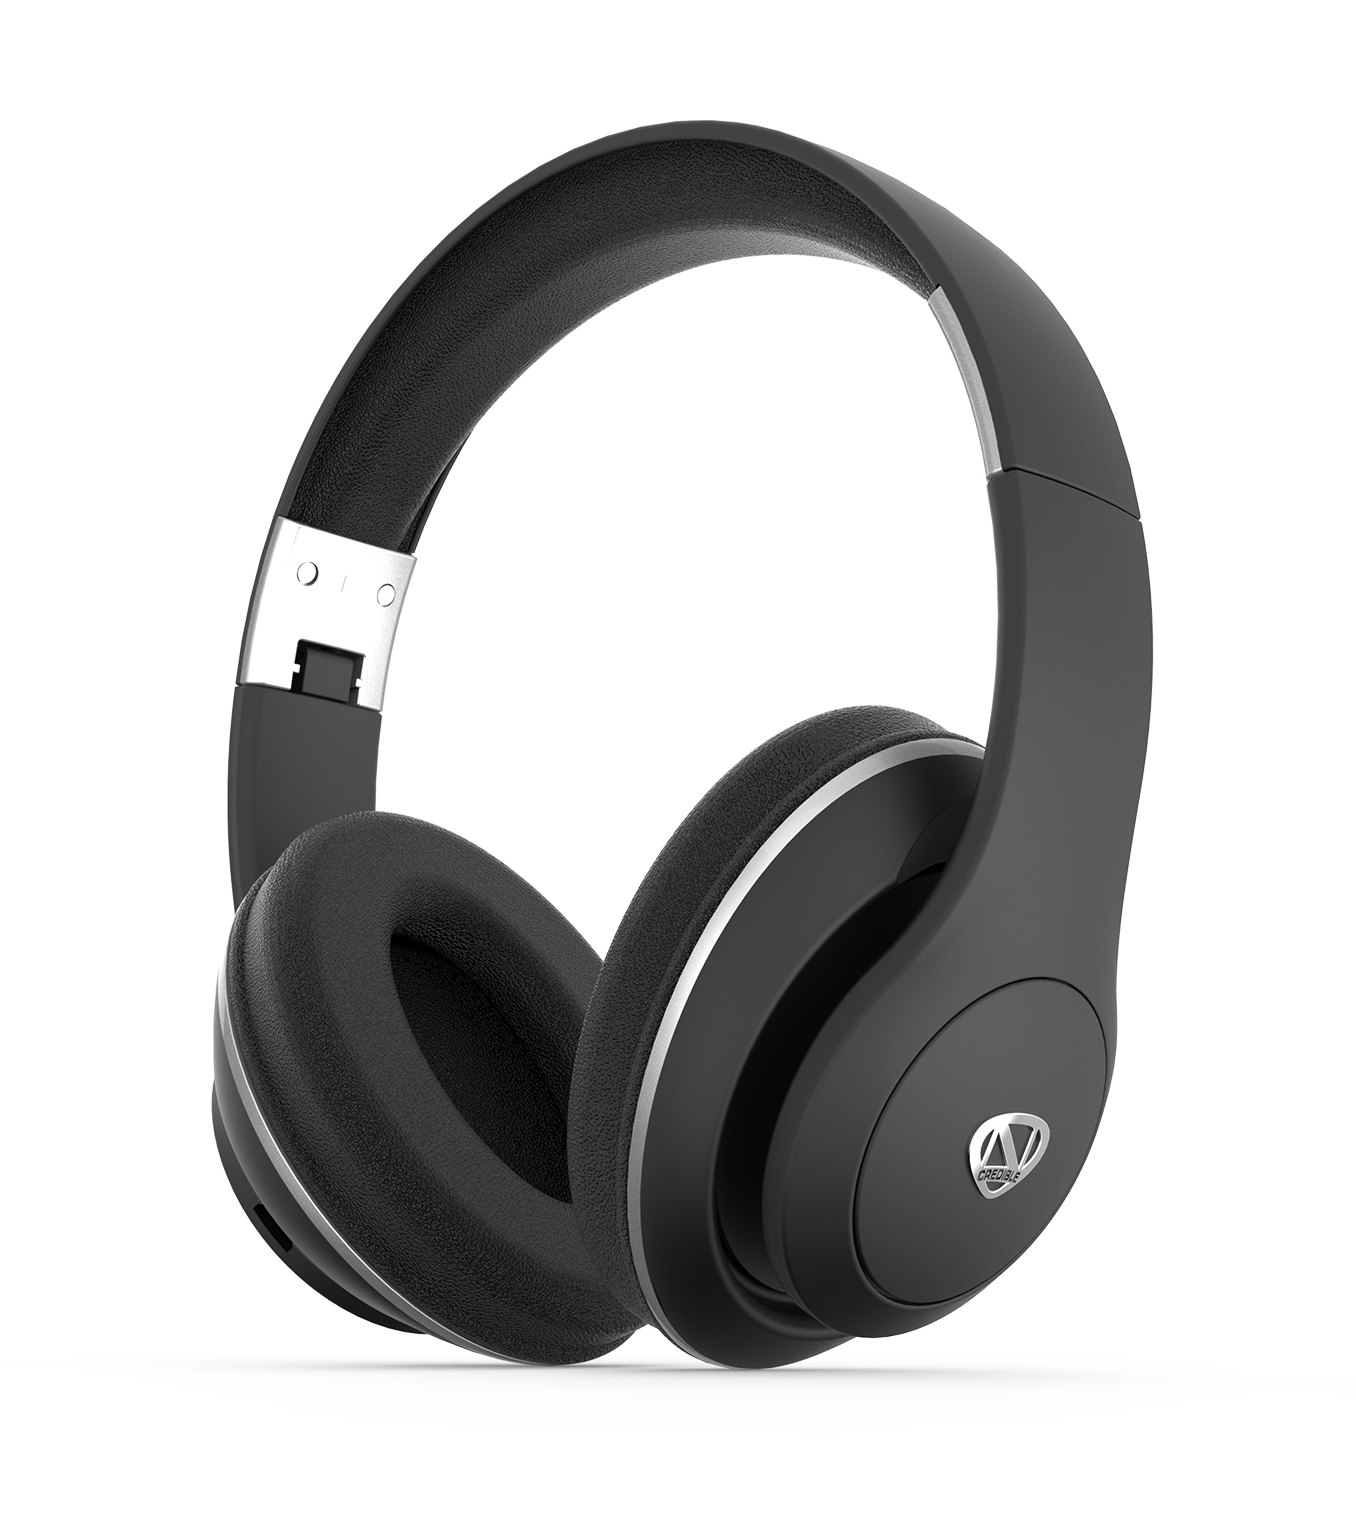 NCredible1 Black wireless headphones